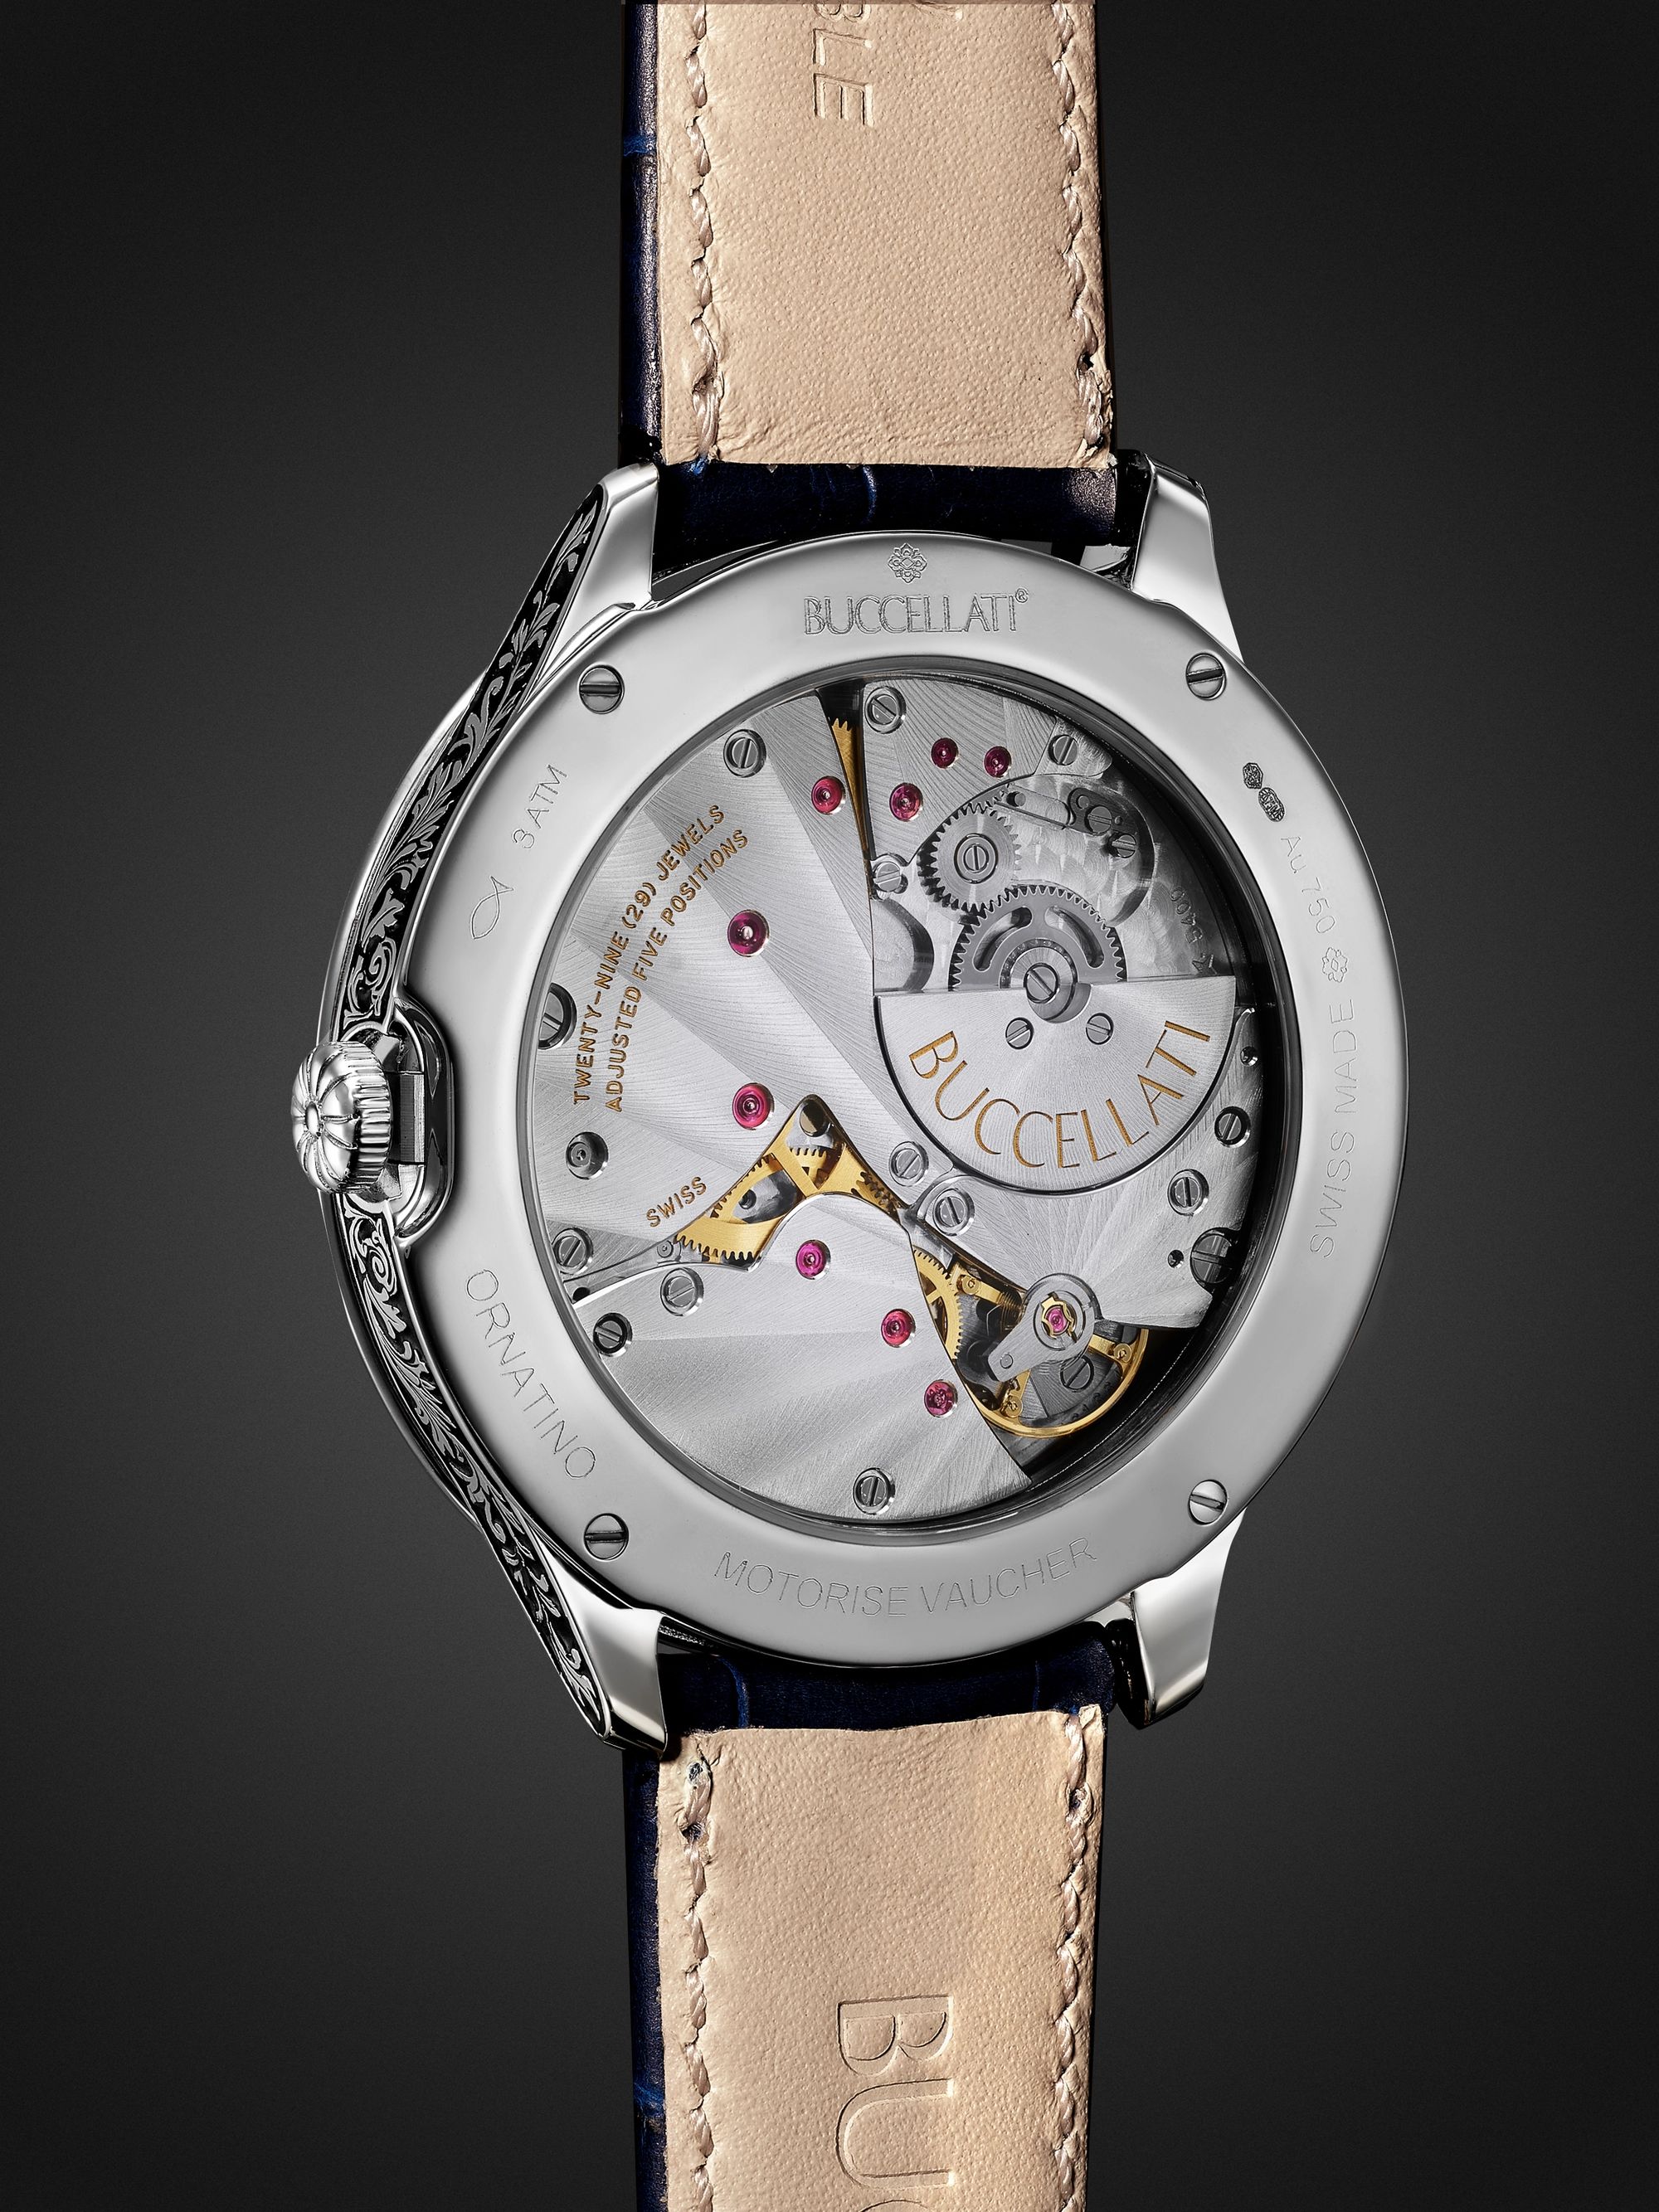 BUCCELLATI Ornatino Automatic 42mm 18-Karat White Gold and Croc-Effect Leather Watch, Ref. No. WAUMGE014262